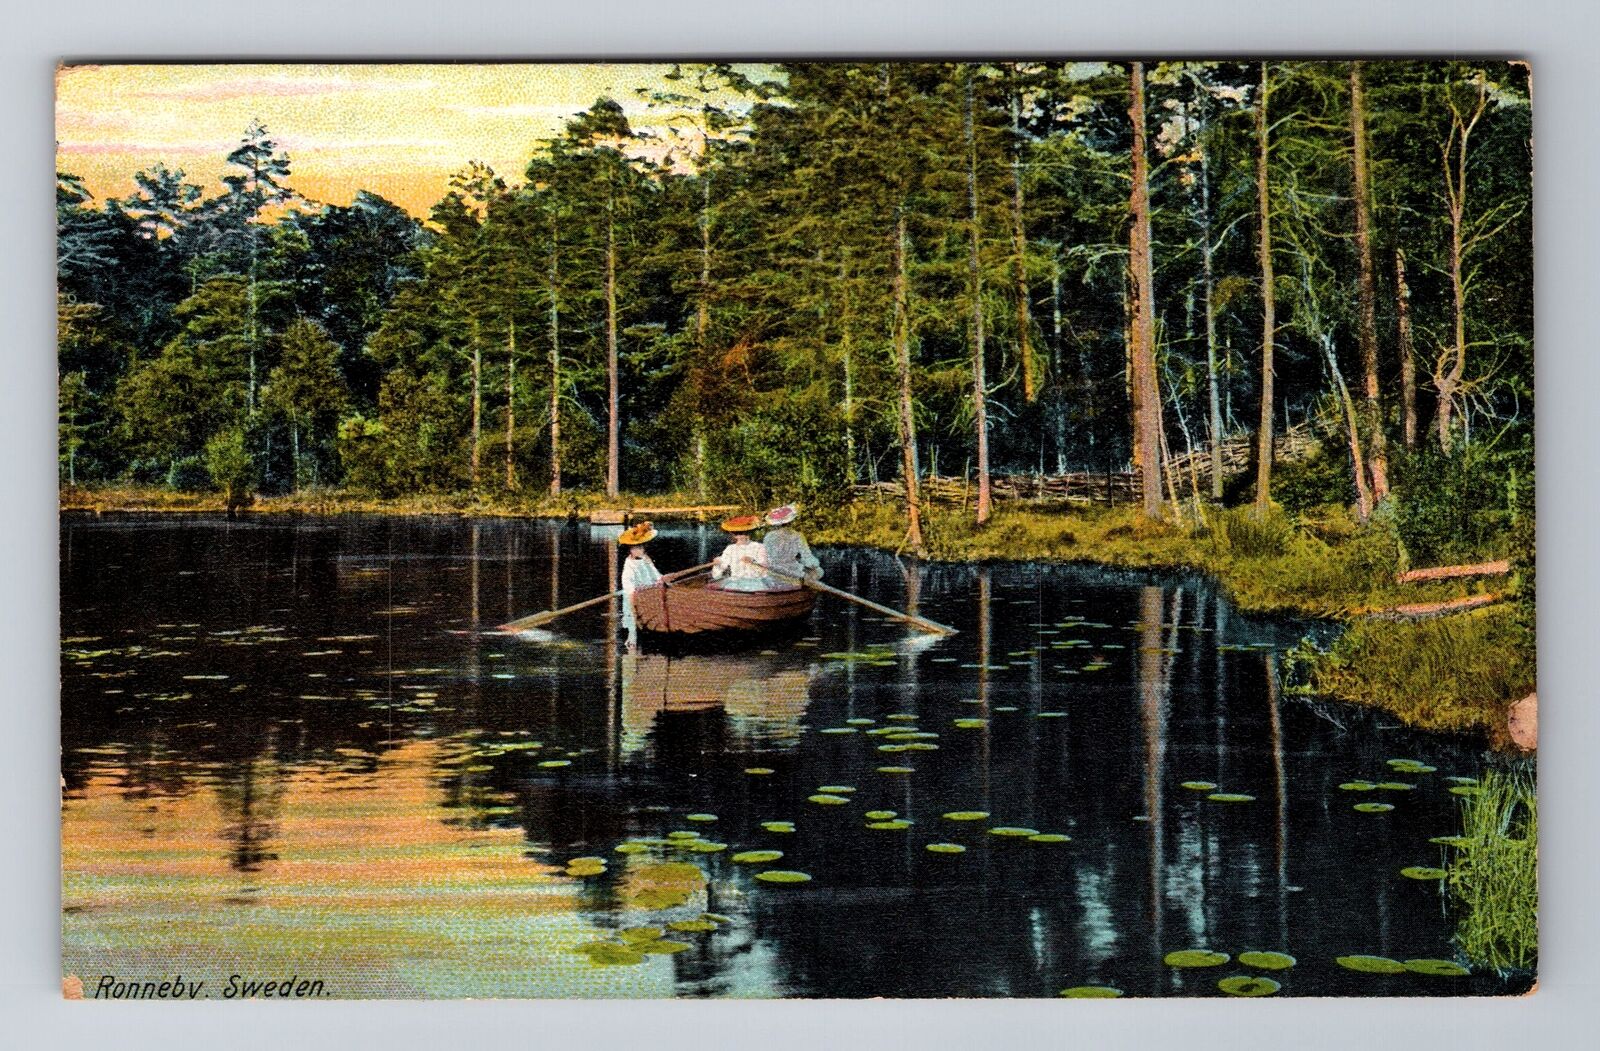 Ronneby-Sweden, Boating on a Lake, Antique Vintage Souvenir Postcard